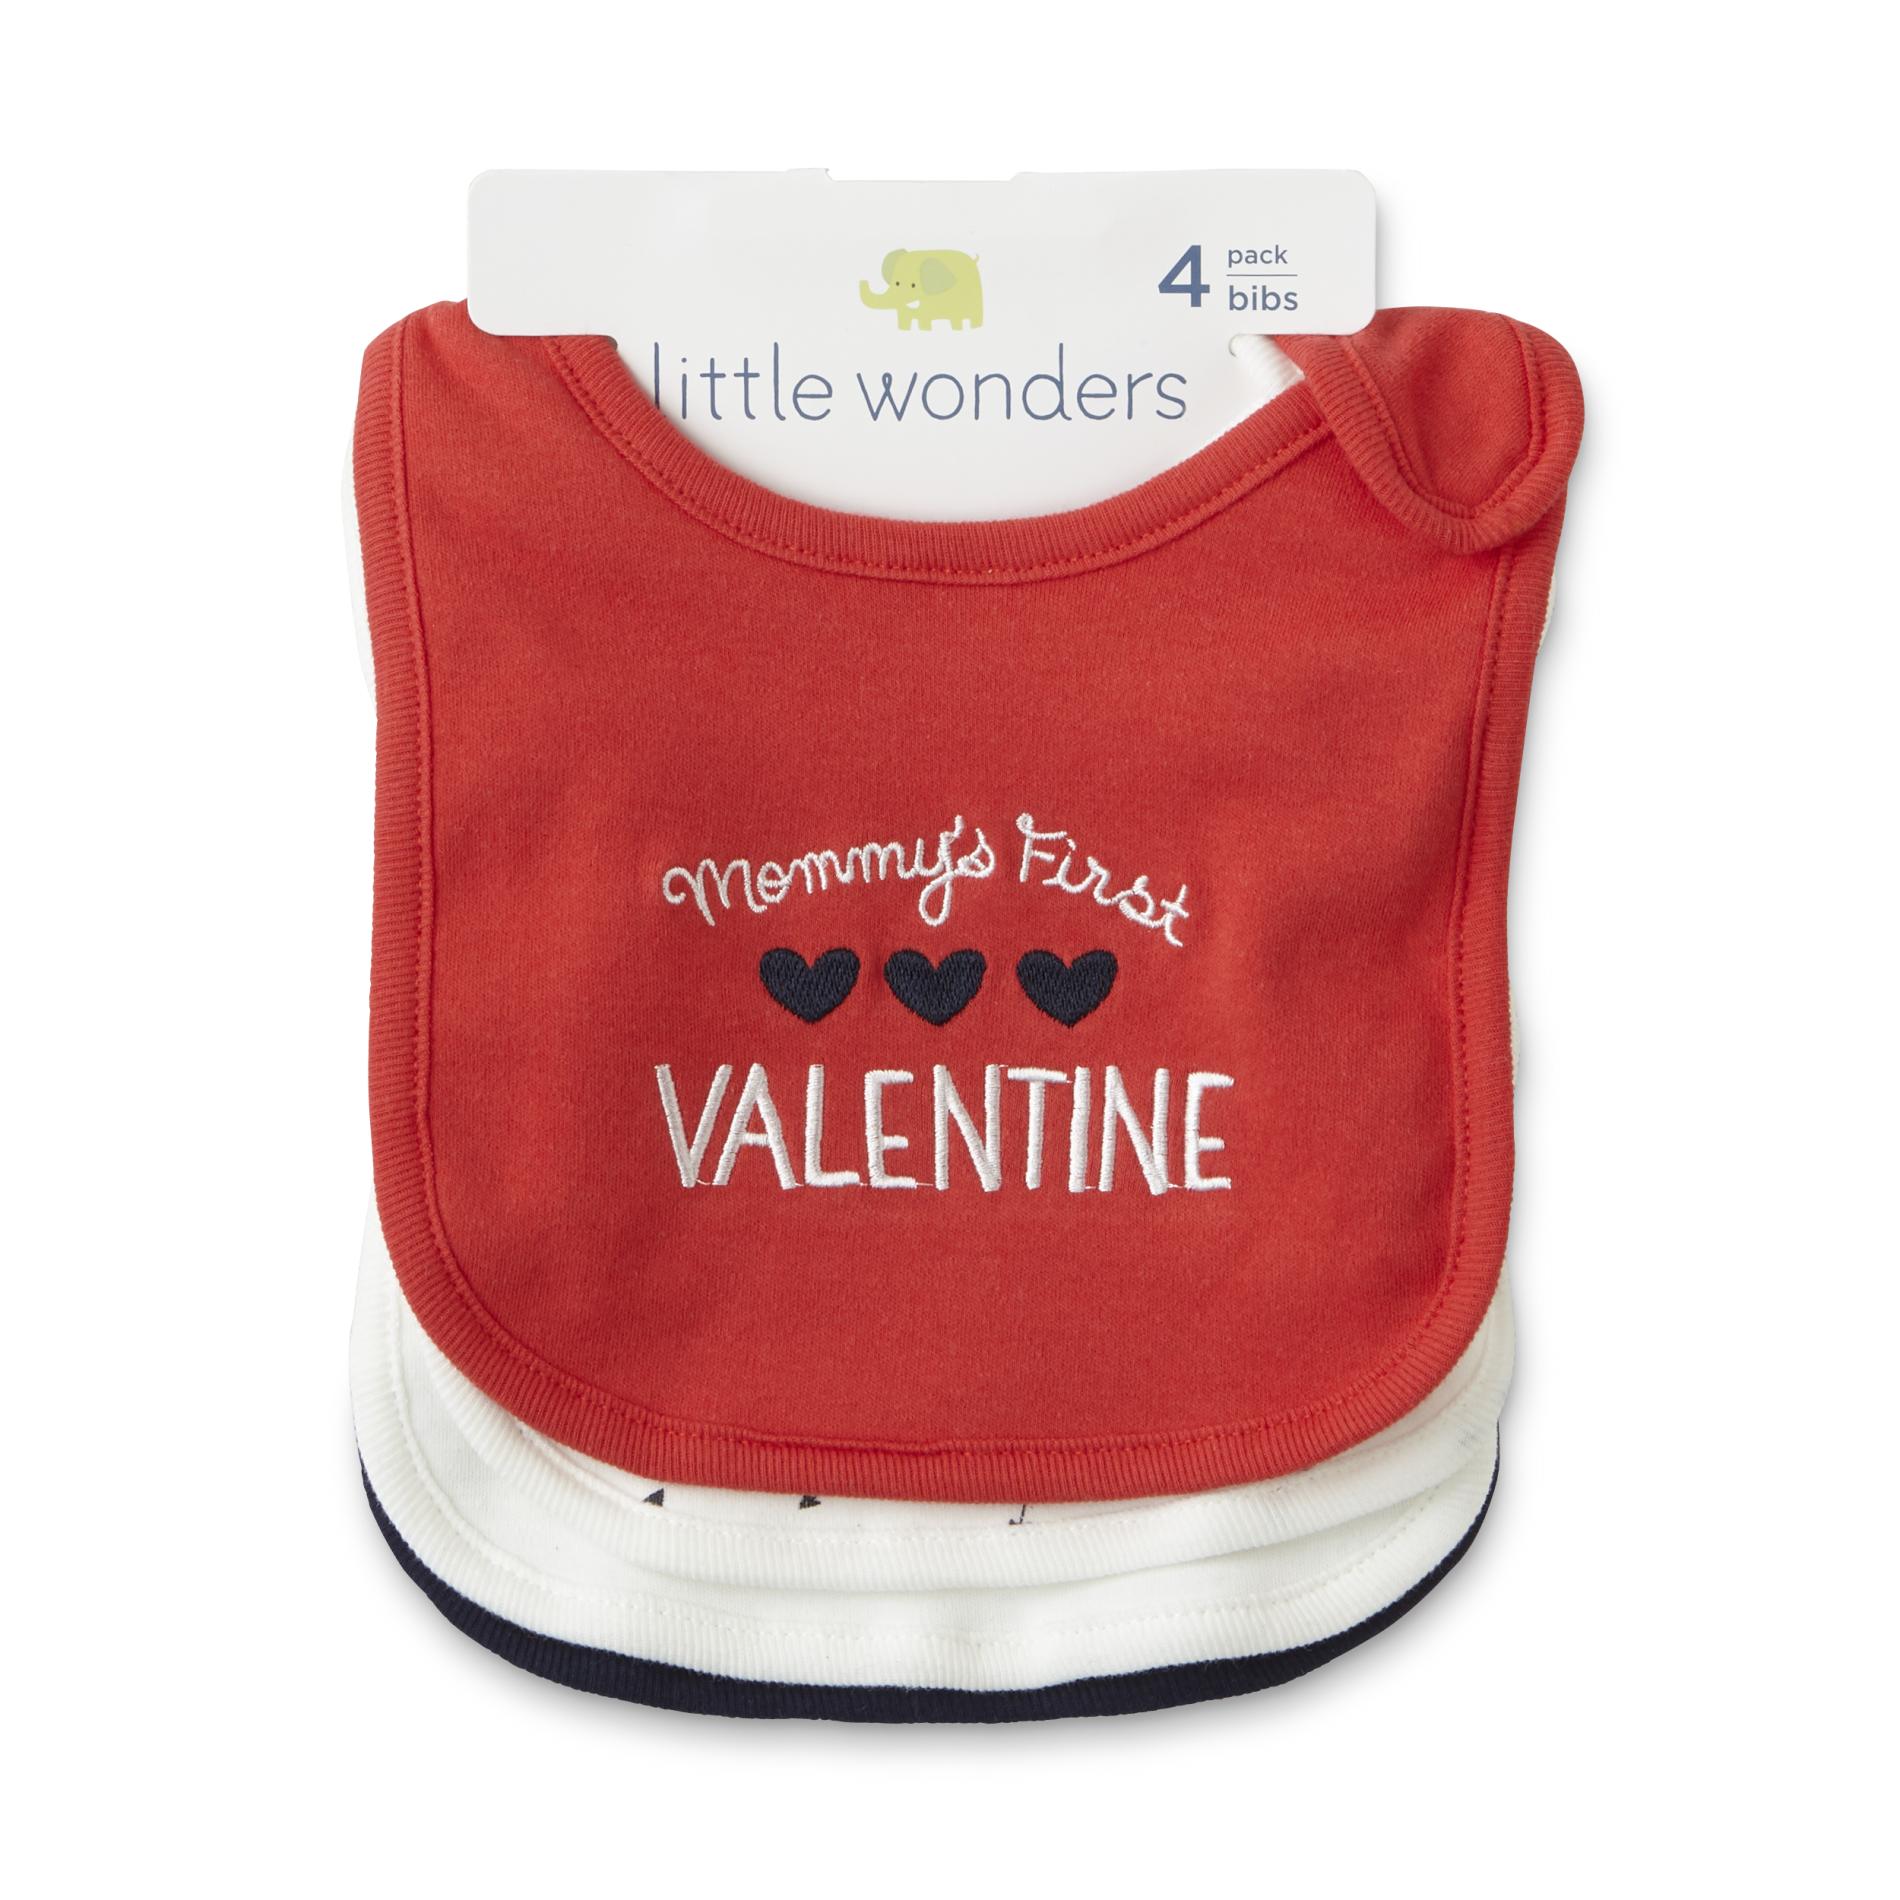 Little Wonders Infants' 4-Pack Valentine's Day Bibs